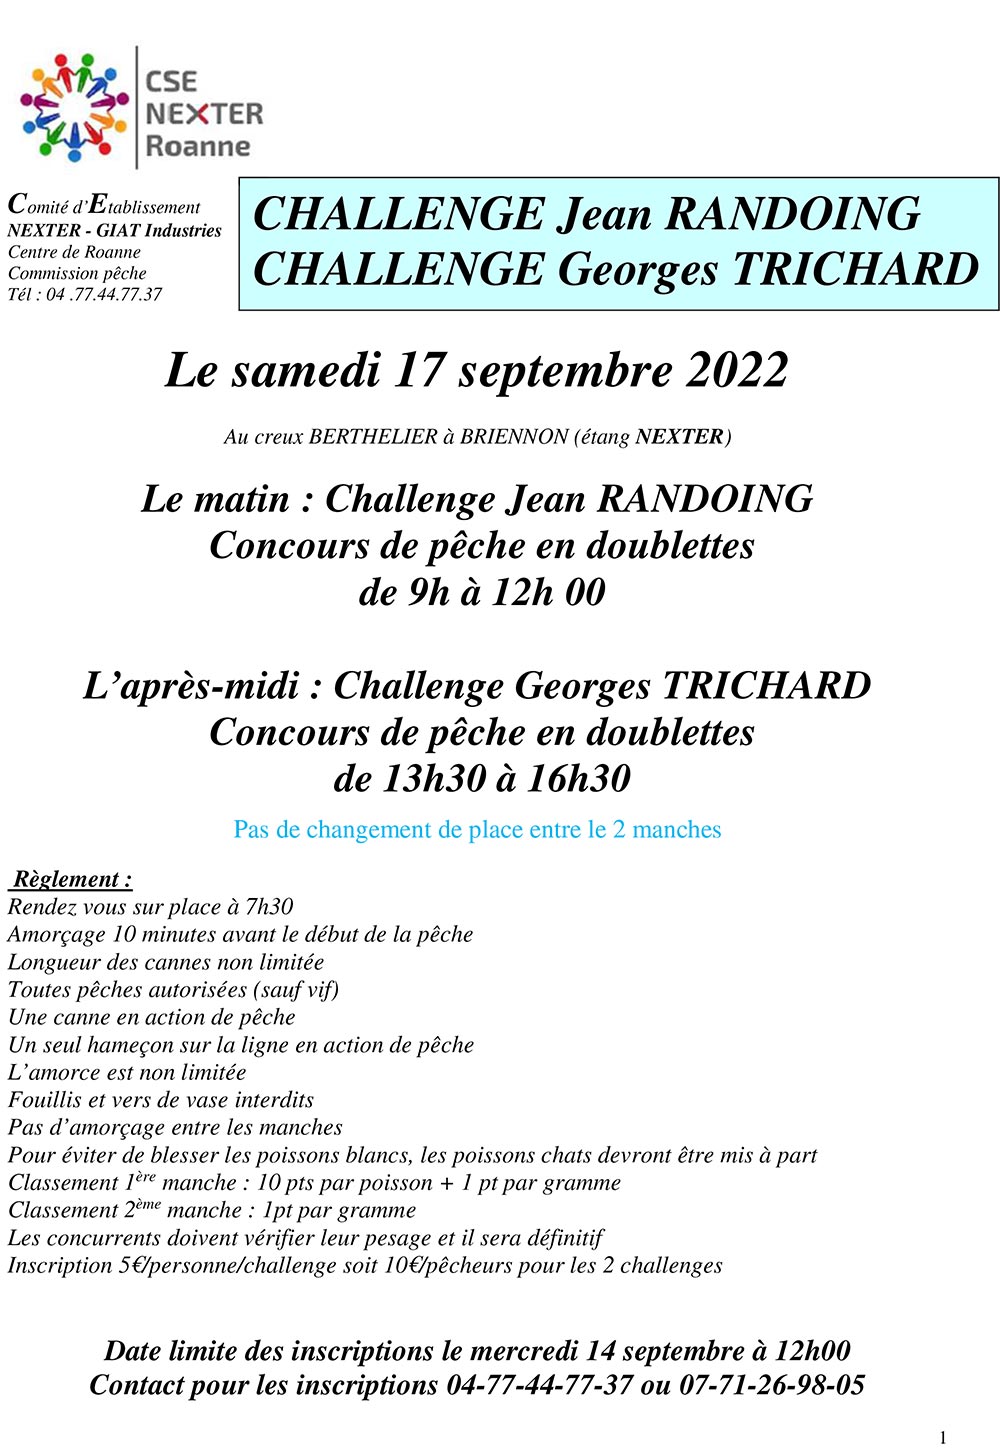 Challenges Jean RANDOING et Georges TRICHARD 2022